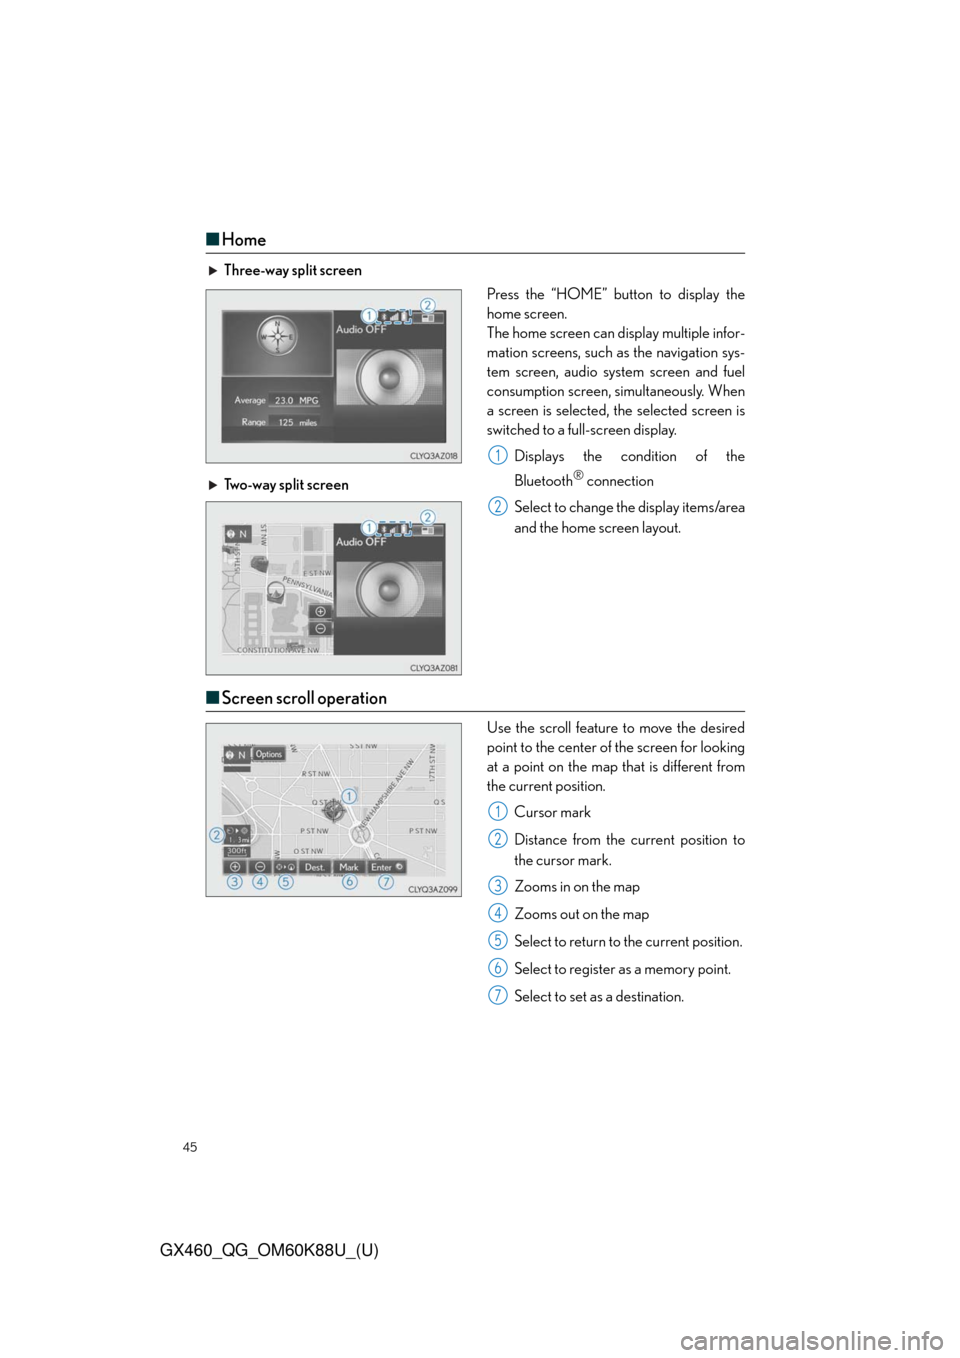 Lexus GX460 2014  Key information / LEXUS 2014 GX460 QUICK GUIDE OWNERS MANUAL (OM60K88U) 45
GX460_QG_OM60K88U_(U)
■Home
Three-way split screen
Press the “HOME” button to display the
home screen.
The home screen can display multiple infor-
mation screens, such as the navigation sys-
